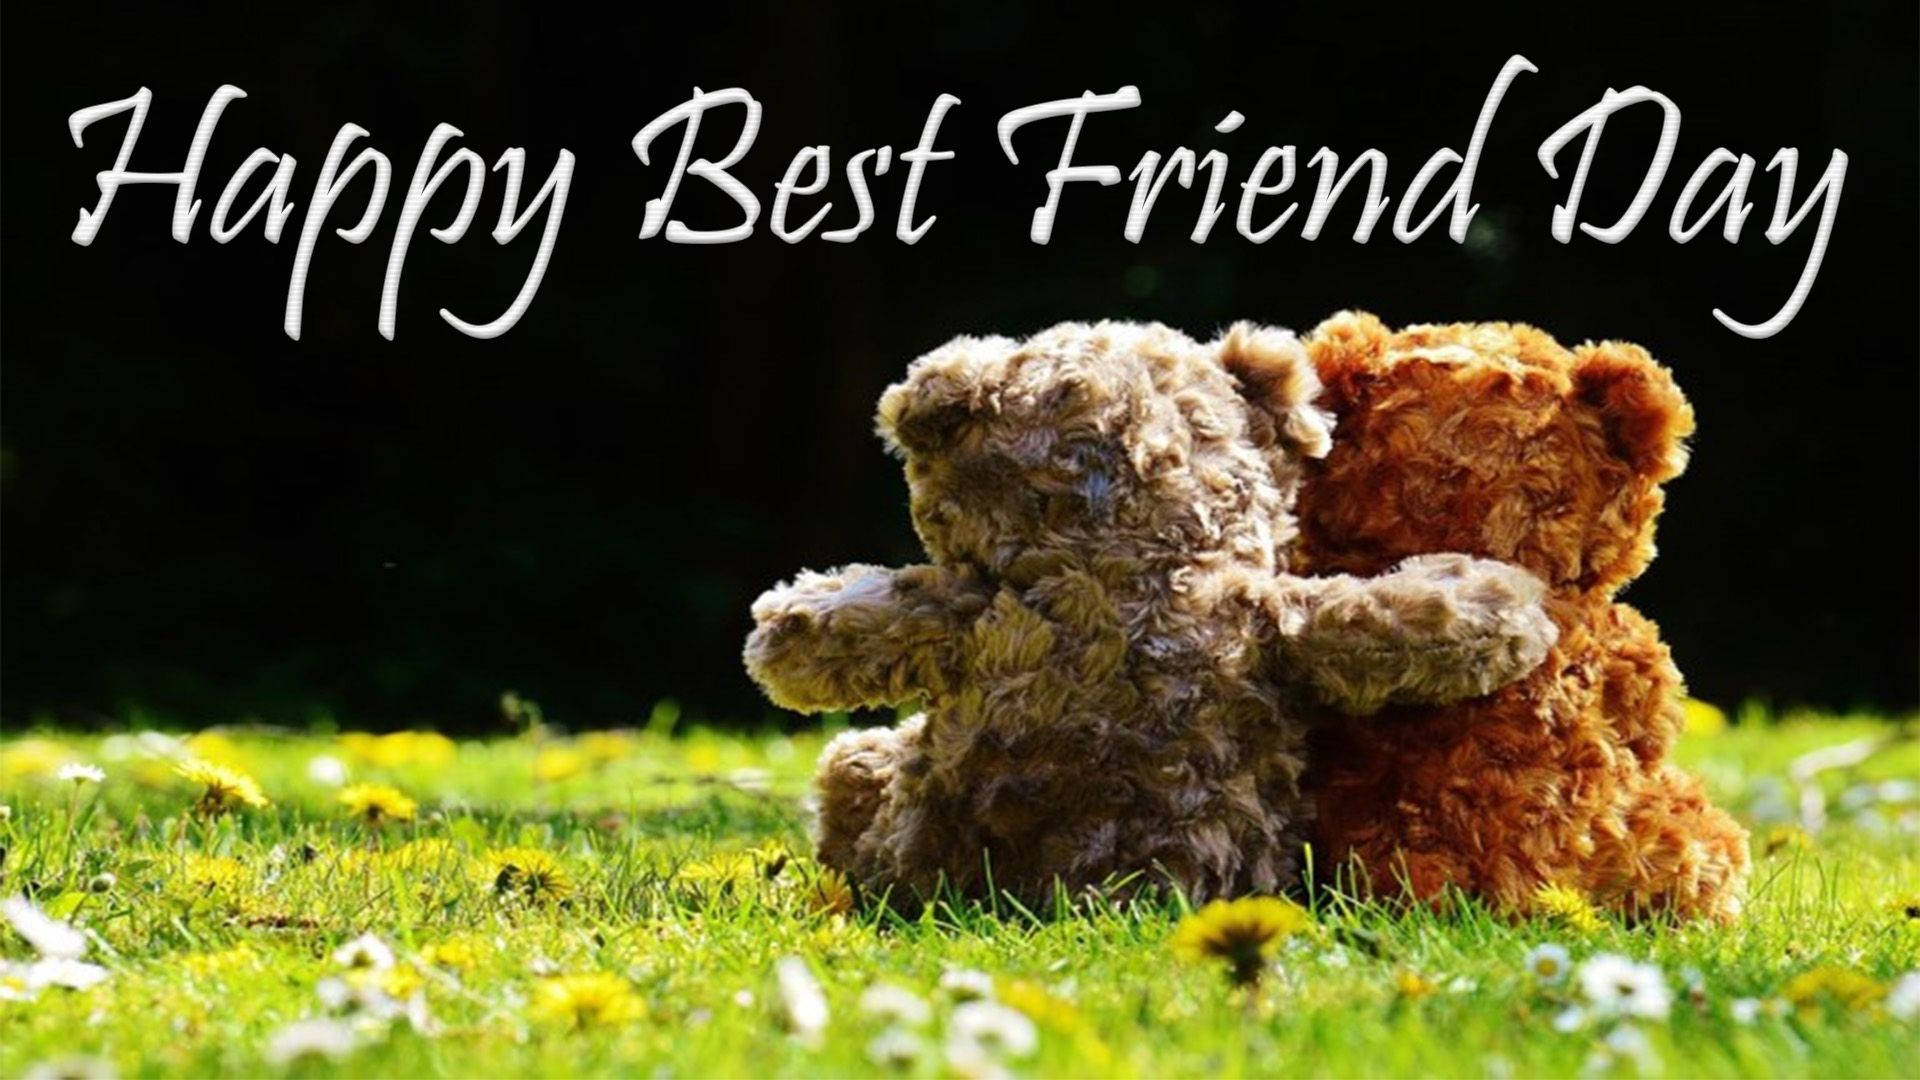 Celebrating Friendship Day With Teddy Bear Hugs Wallpaper